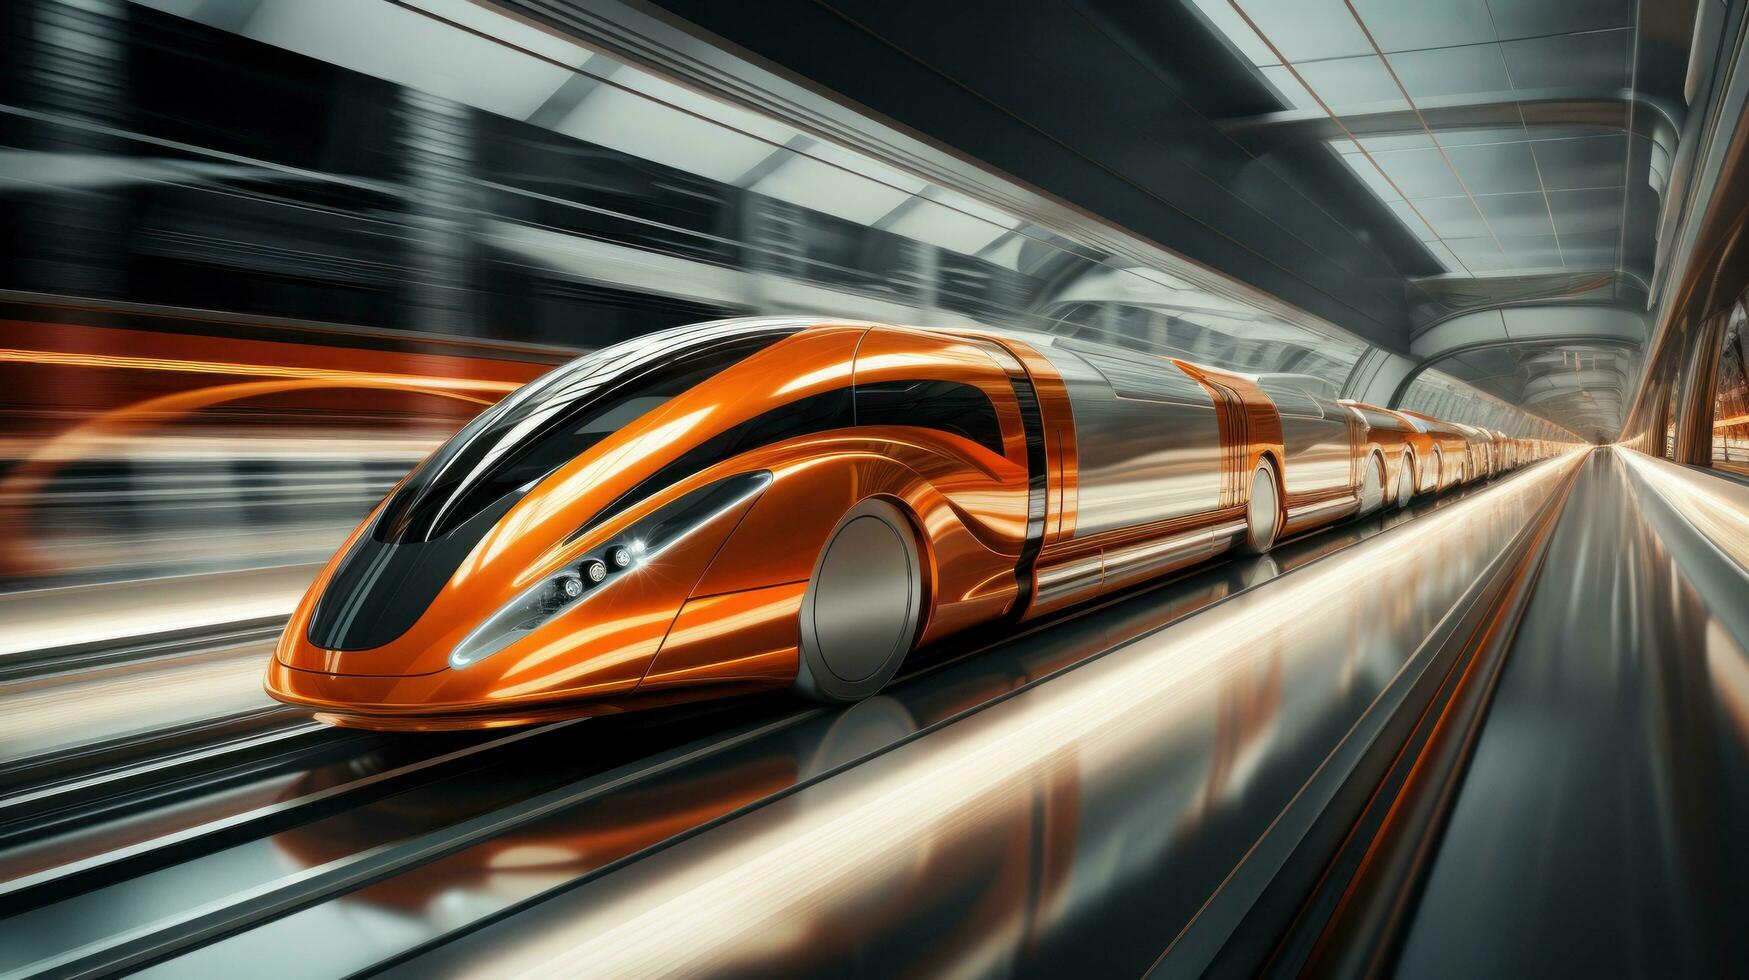 AI generated an orange and silver train speeding down the train tracks, photo